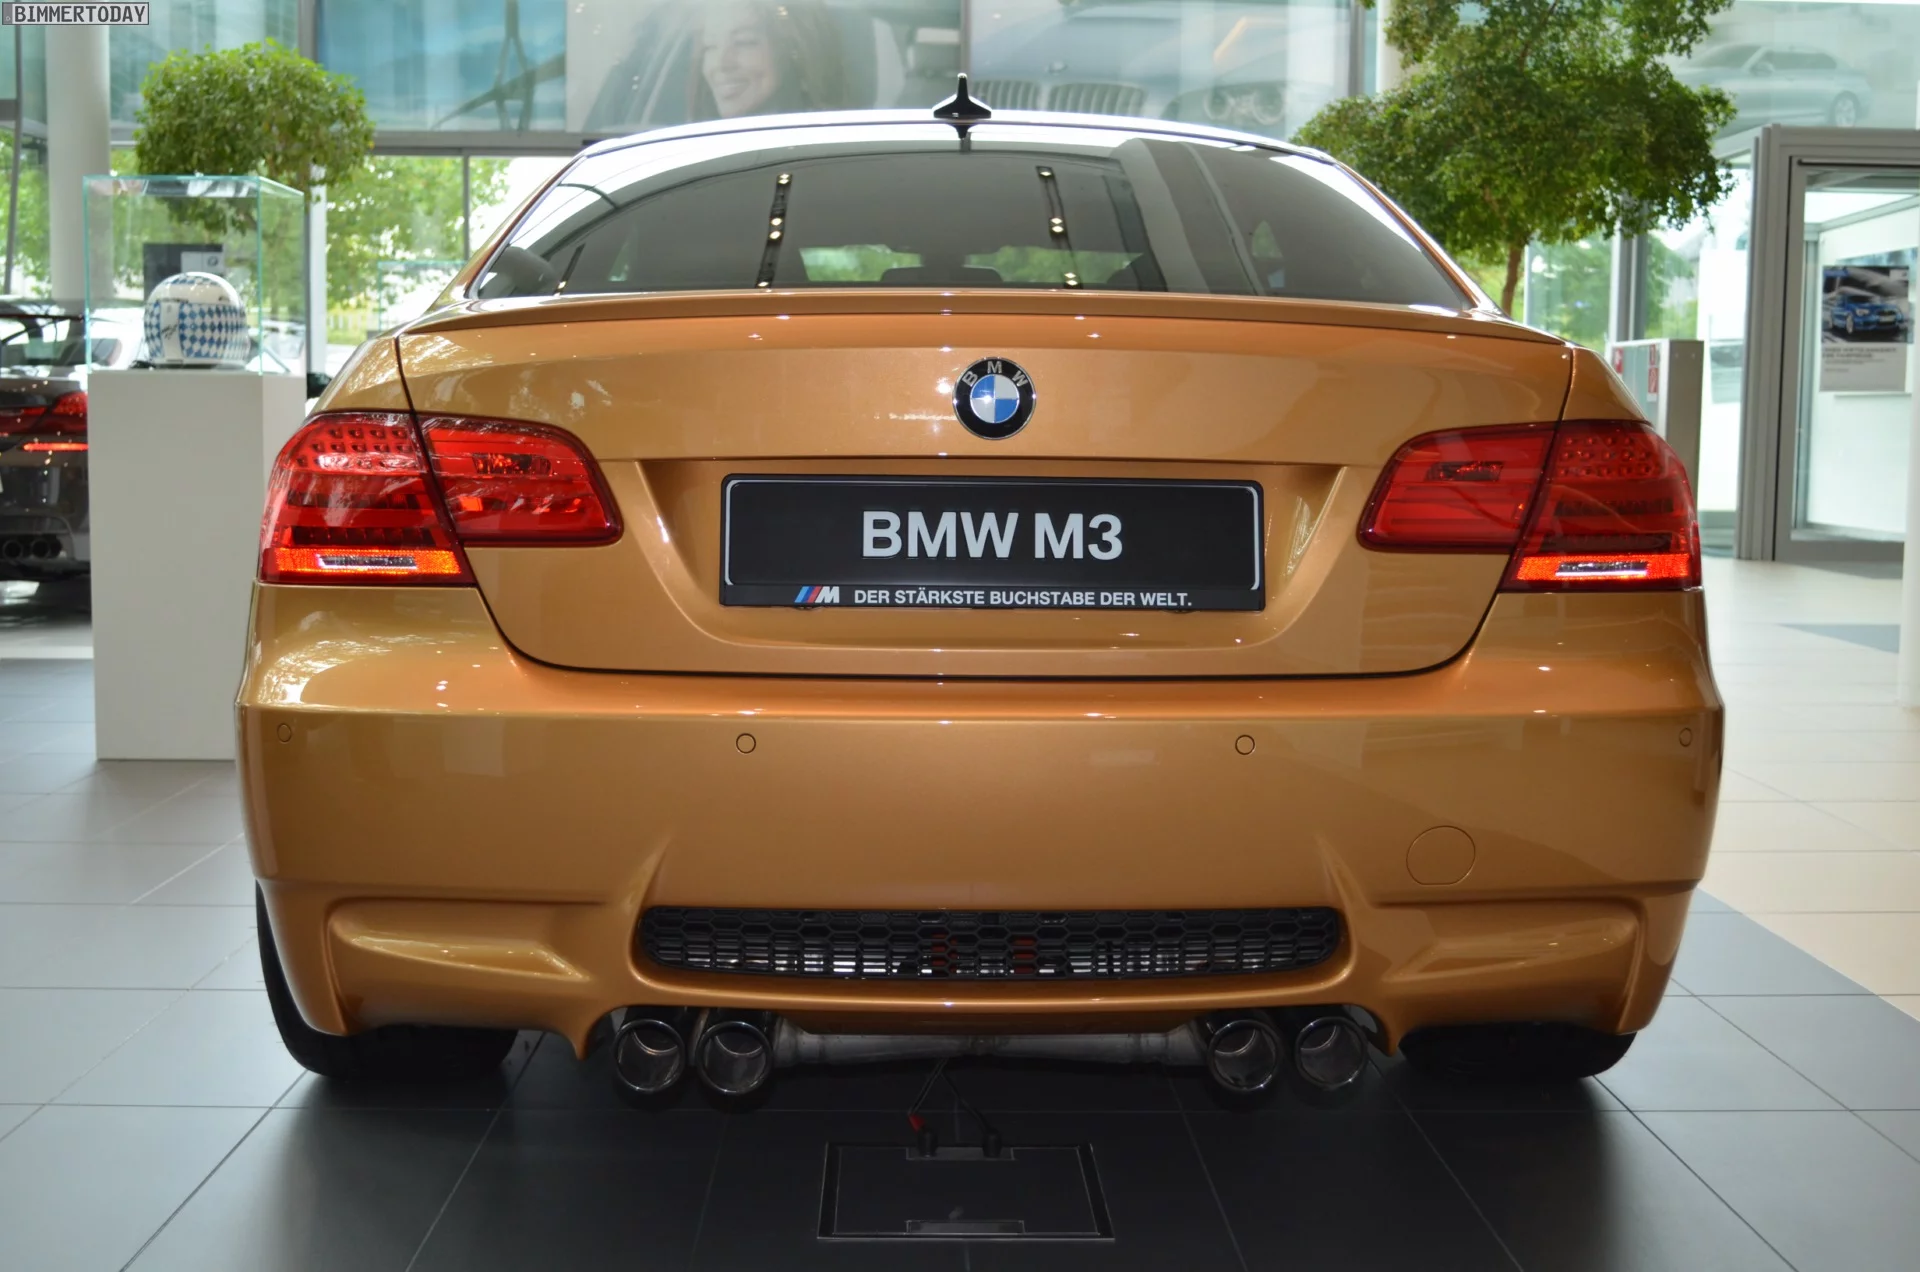 Sunburst Gold BMW M3